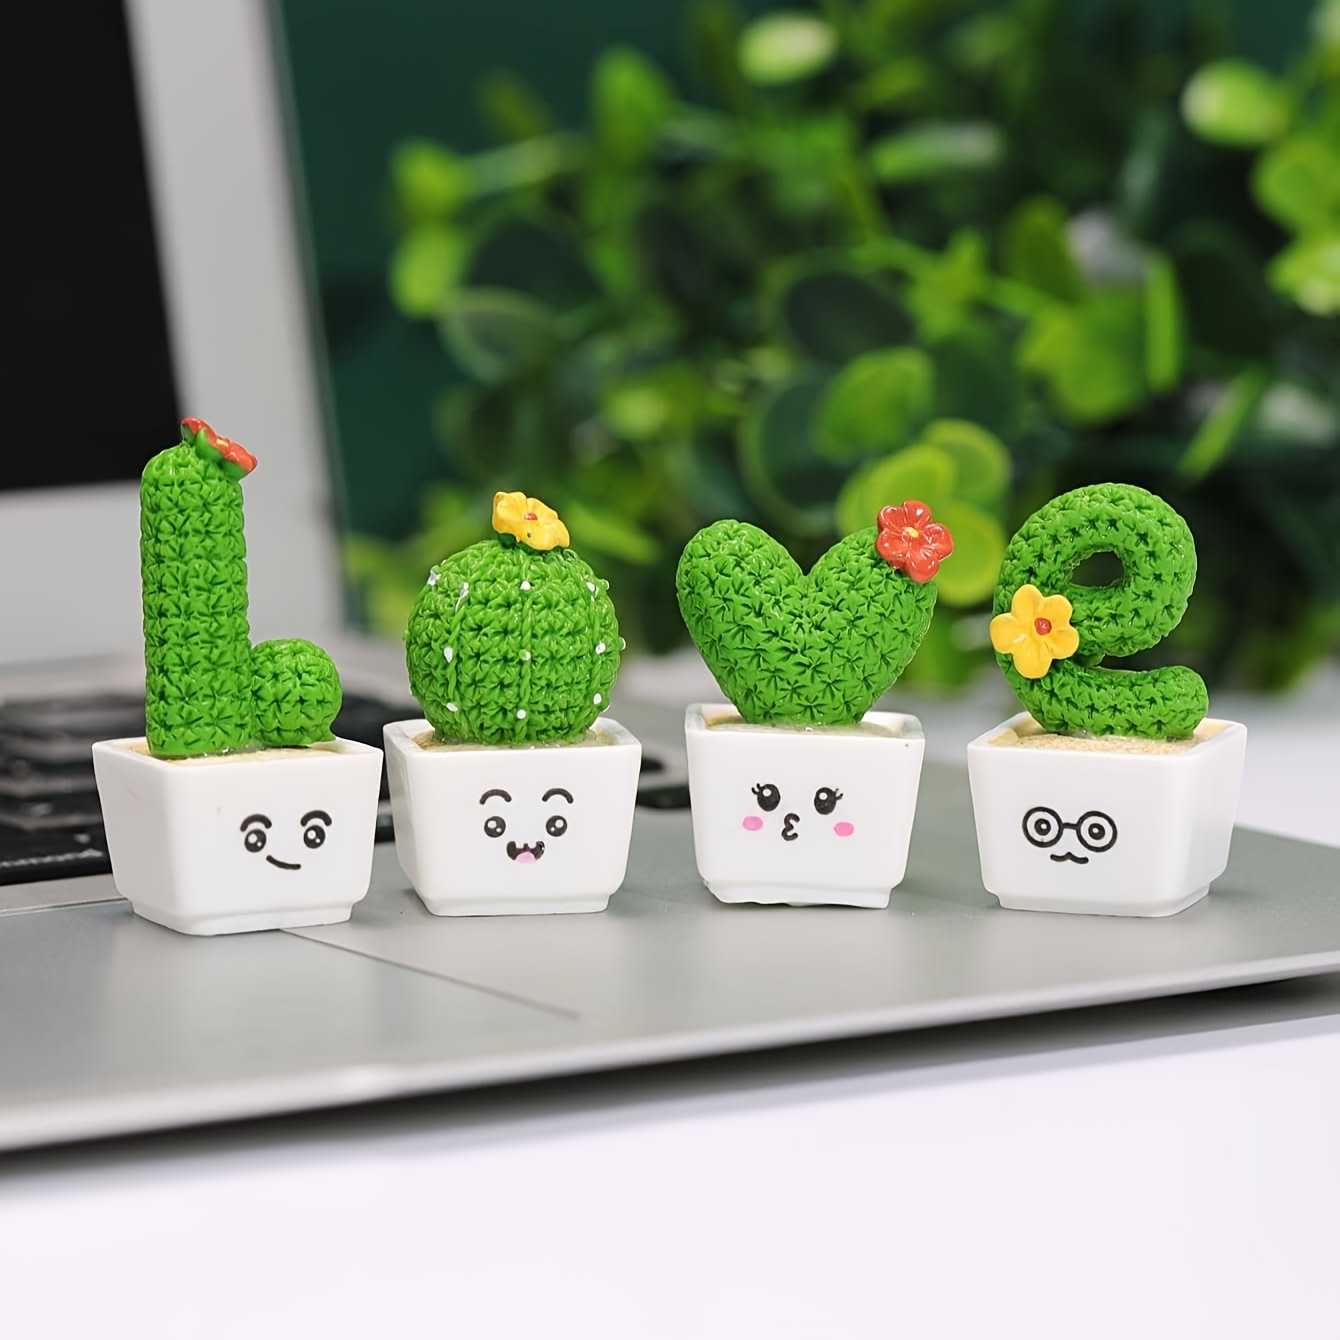 

4pcs Adorable Cactus Love Potted Resin Figurines, Colorful Desk Plant Decoration, Miniature Home Decor, Cute Facial Expressions, Office Desk & Shelf Decor